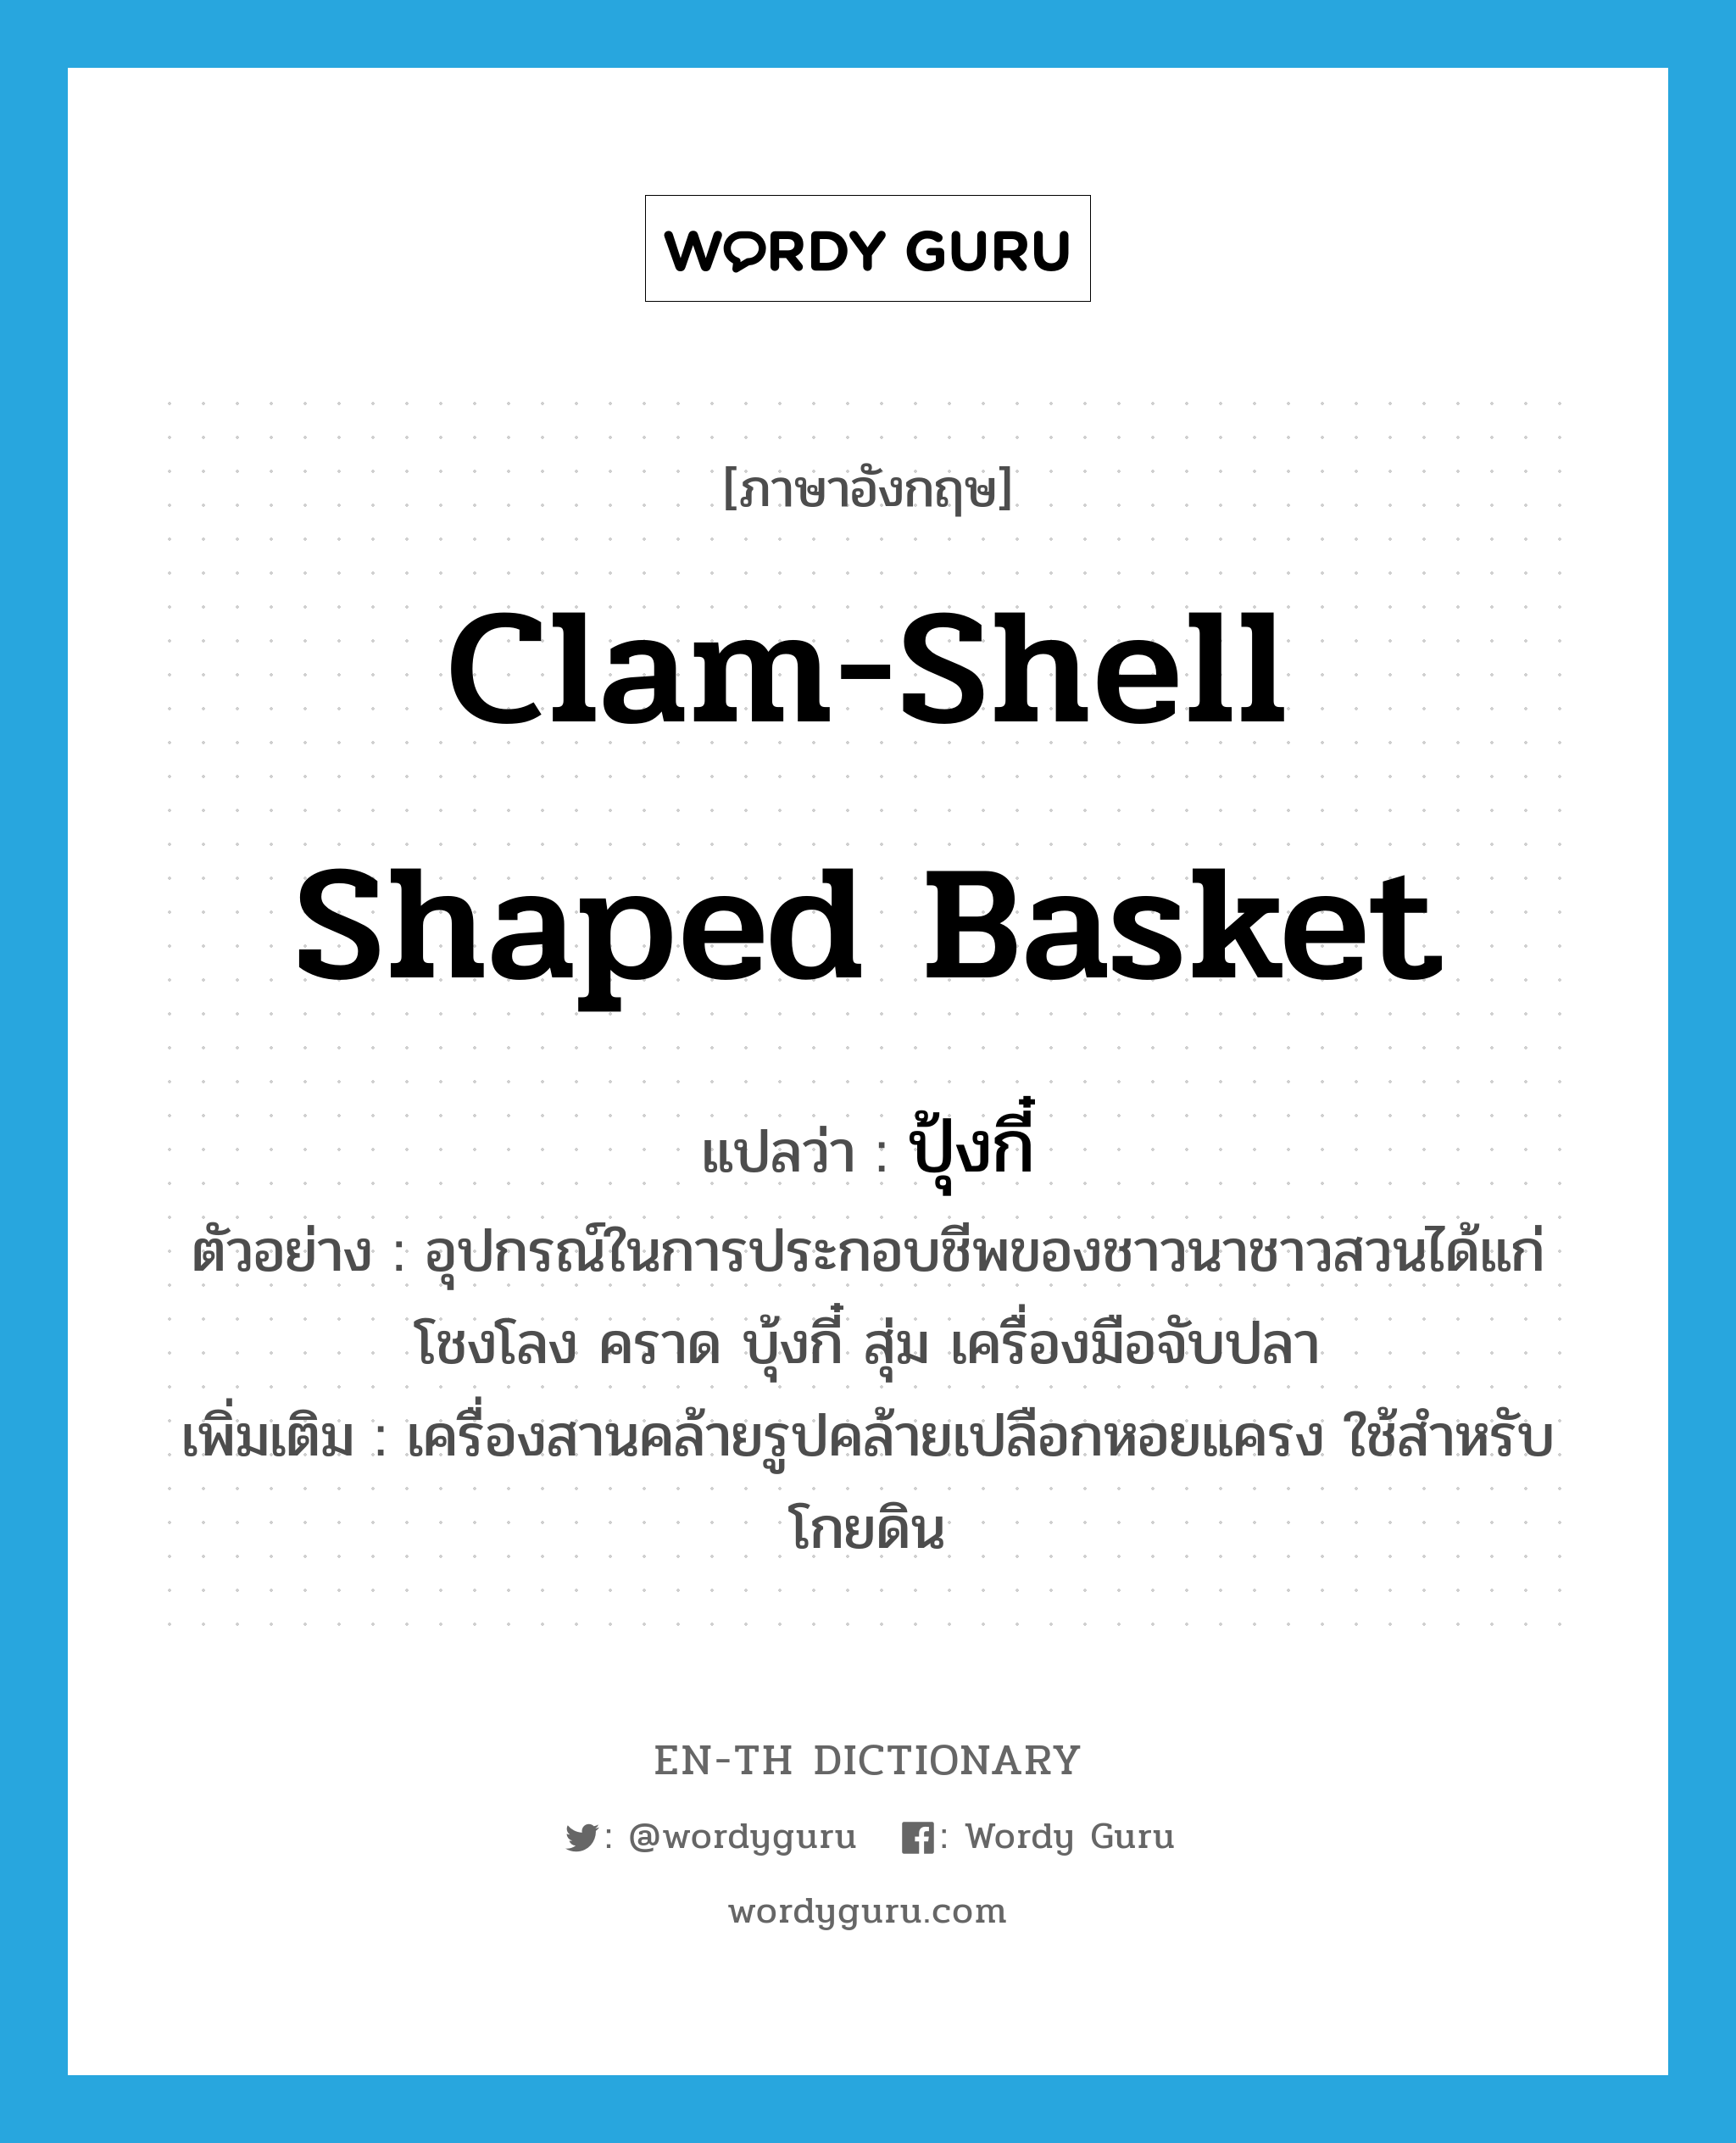 clam-shell shaped basket แปลว่า?, คำศัพท์ภาษาอังกฤษ clam-shell shaped basket แปลว่า ปุ้งกี๋ ประเภท N ตัวอย่าง อุปกรณ์ในการประกอบชีพของชาวนาชาวสวนได้แก่ โชงโลง คราด บุ้งกี๋ สุ่ม เครื่องมือจับปลา เพิ่มเติม เครื่องสานคล้ายรูปคล้ายเปลือกหอยแครง ใช้สำหรับโกยดิน หมวด N